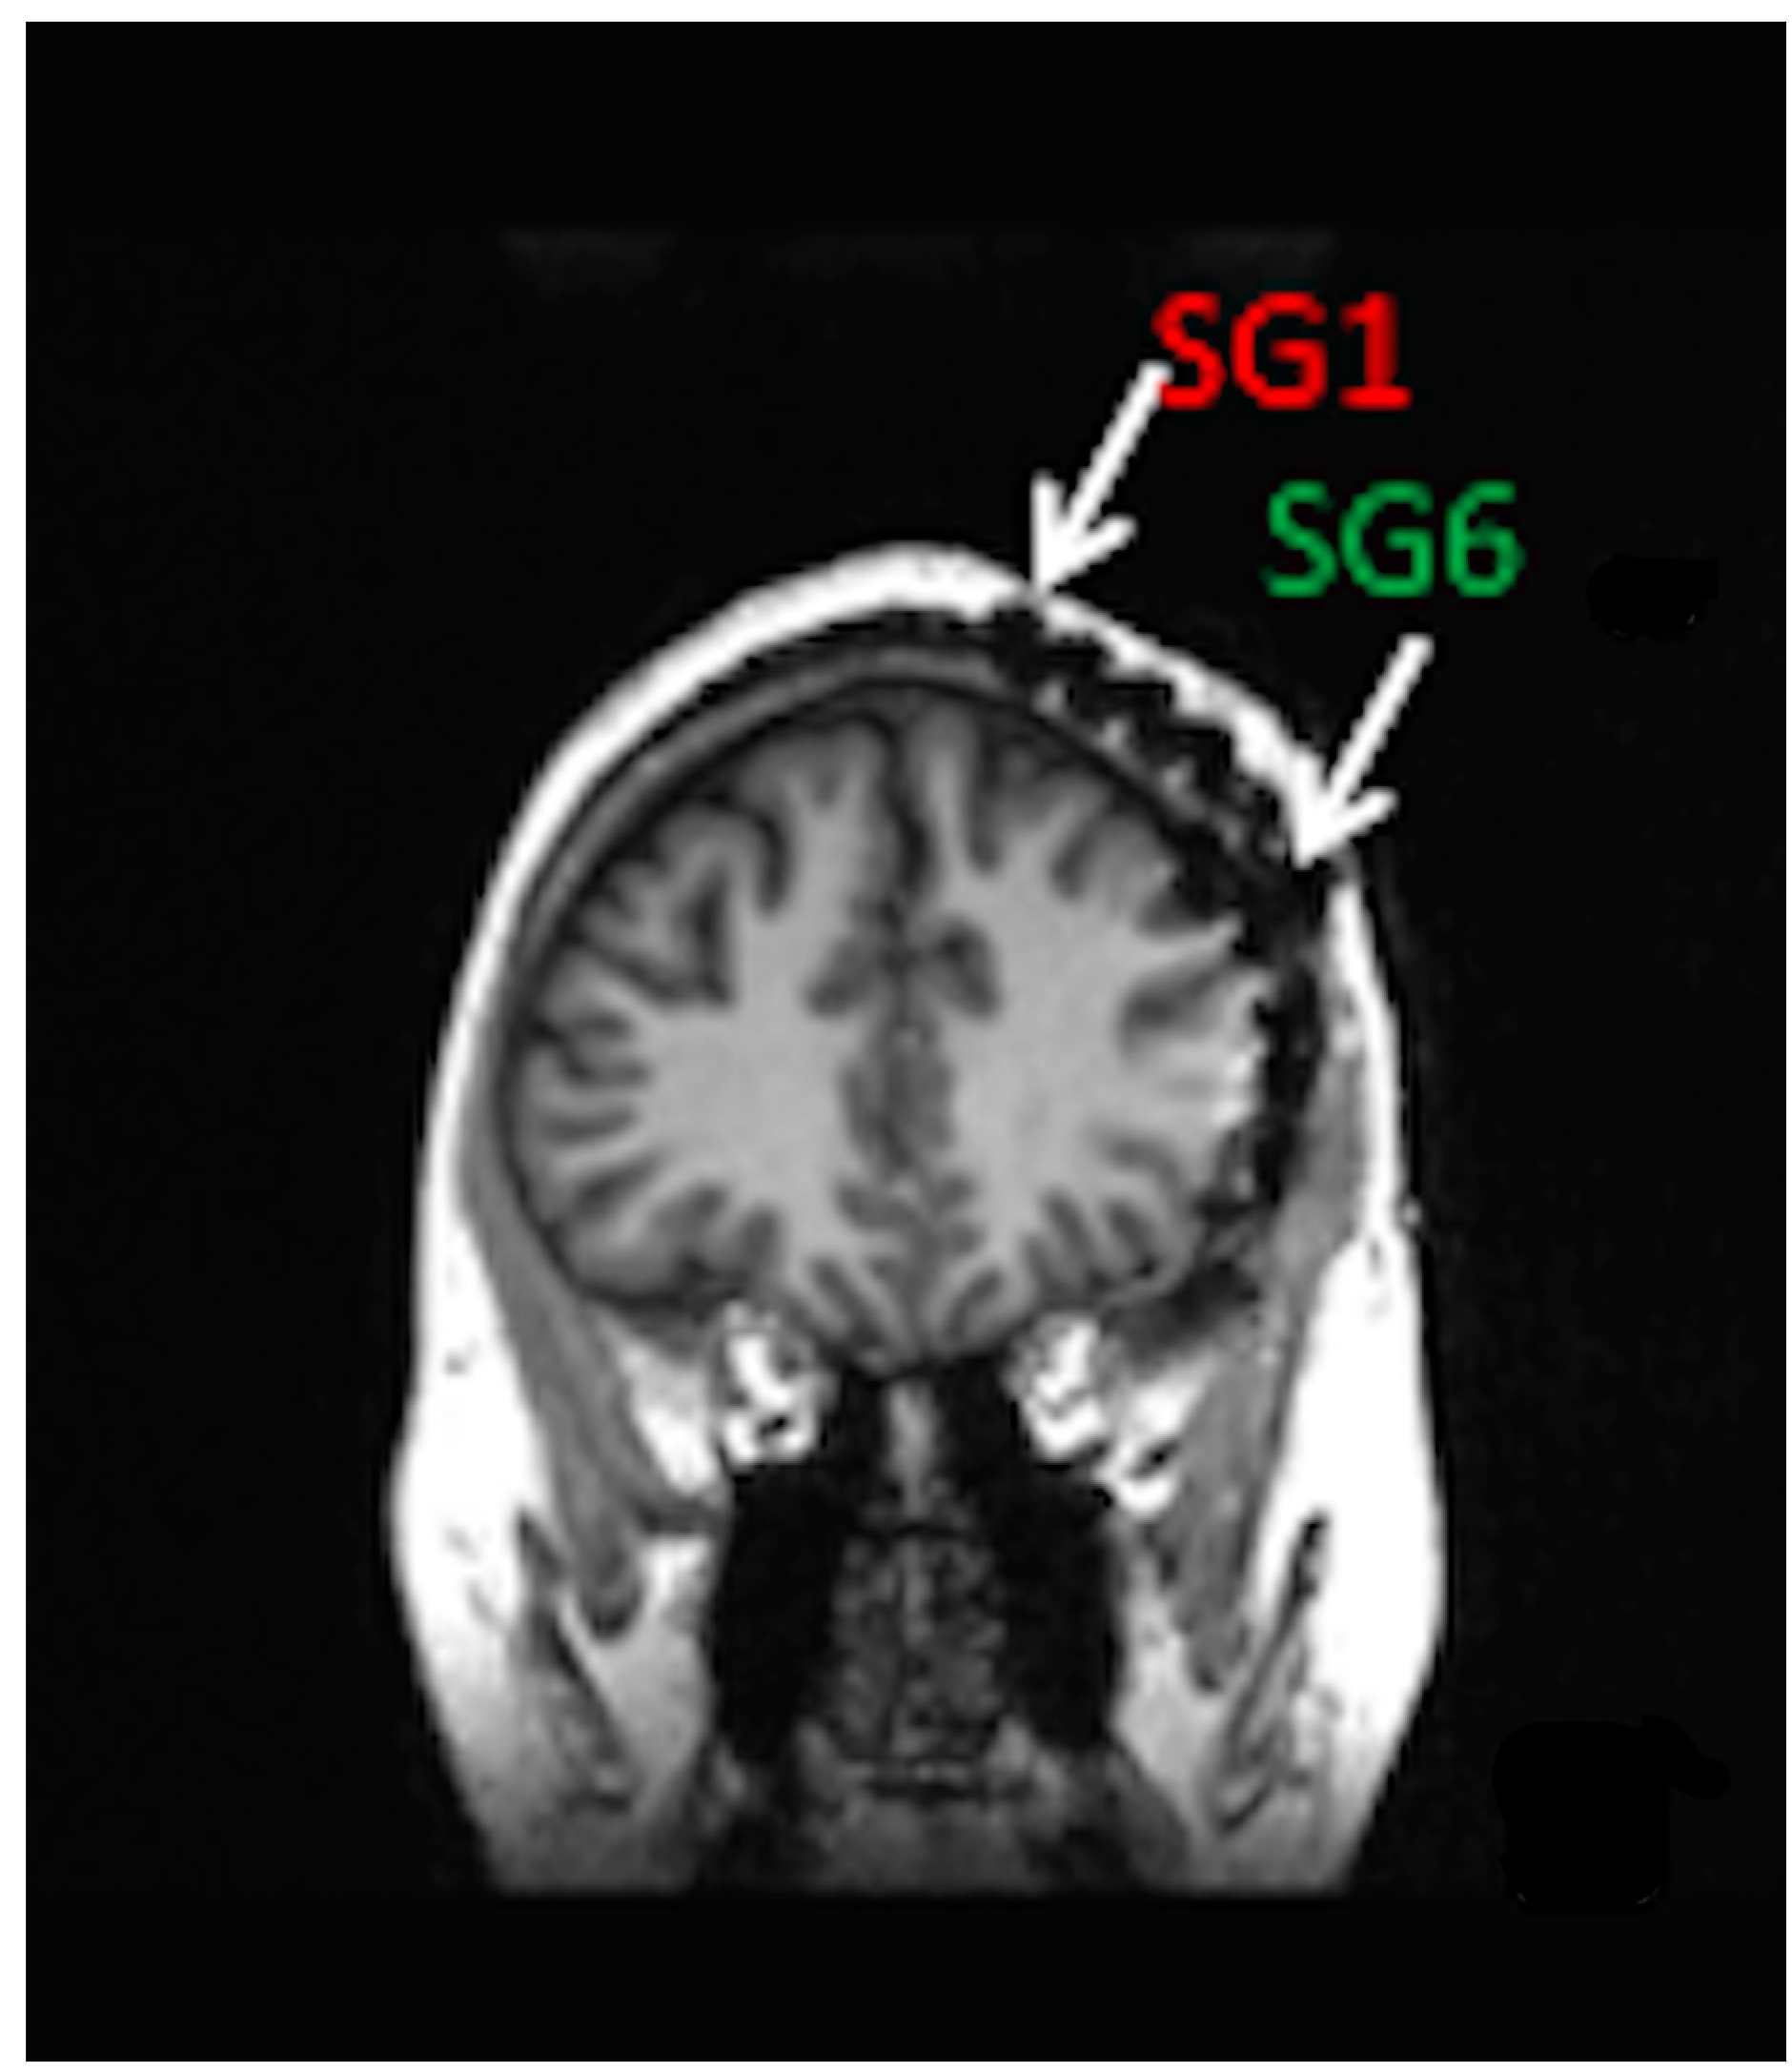 eeg brain scan